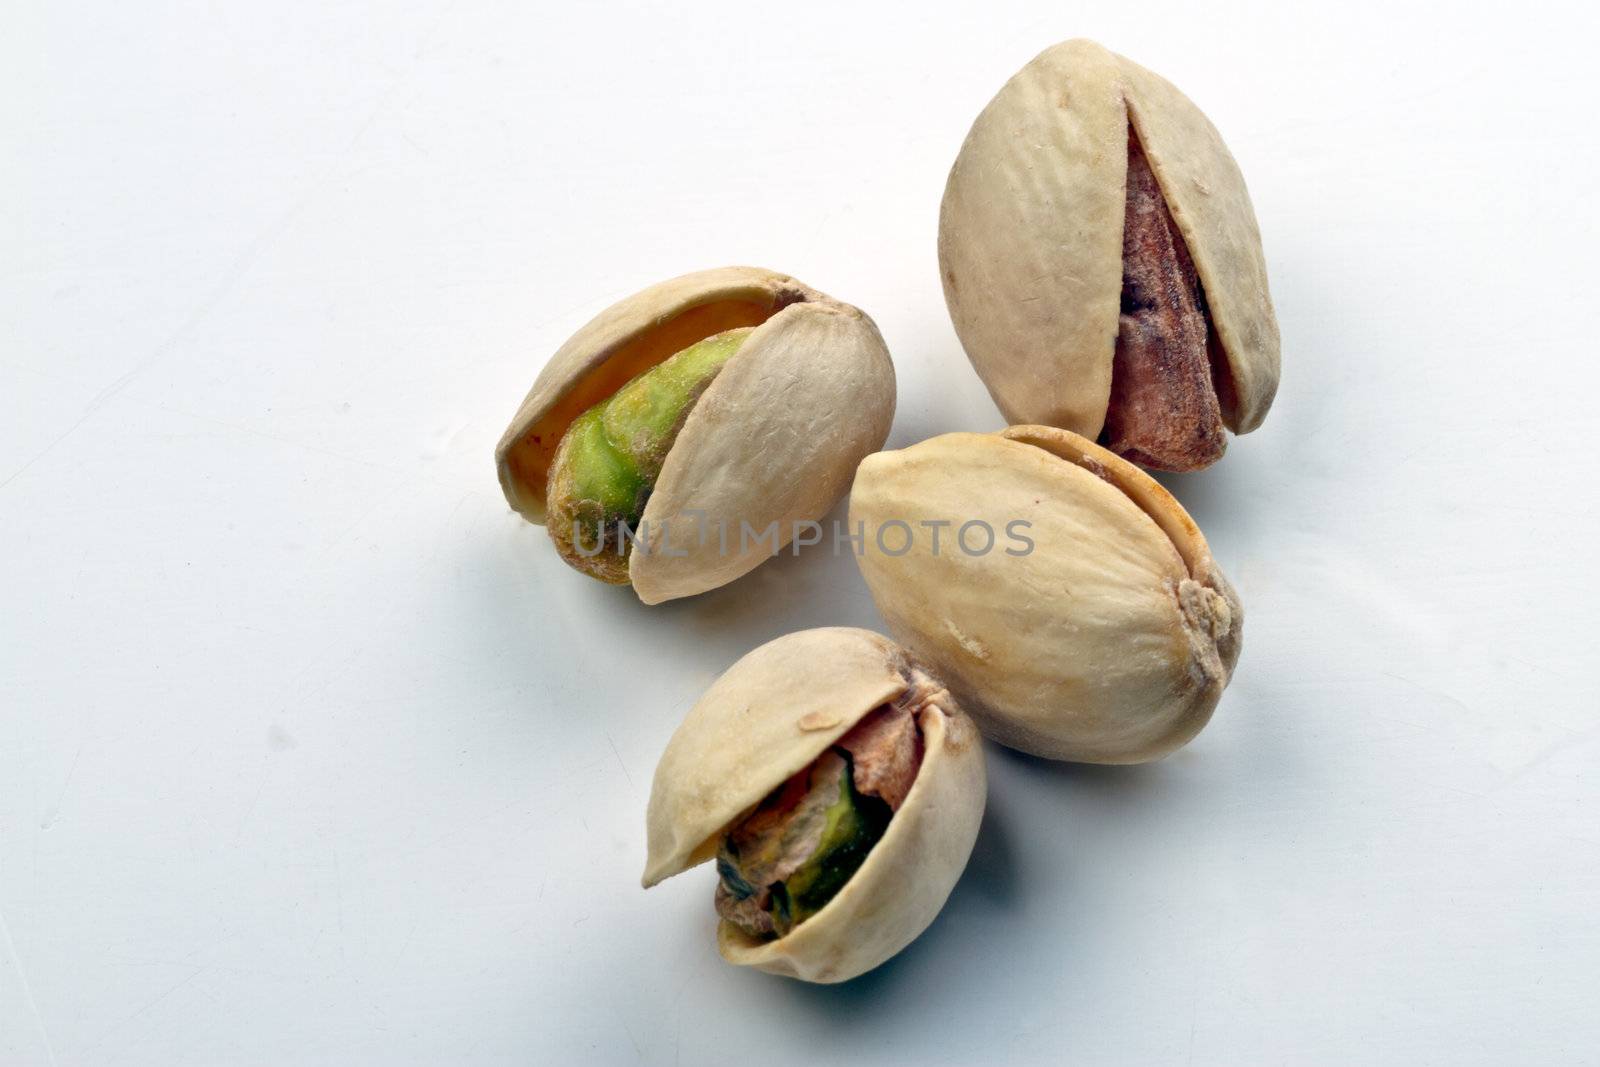 Four hole pistachio nuts on white background